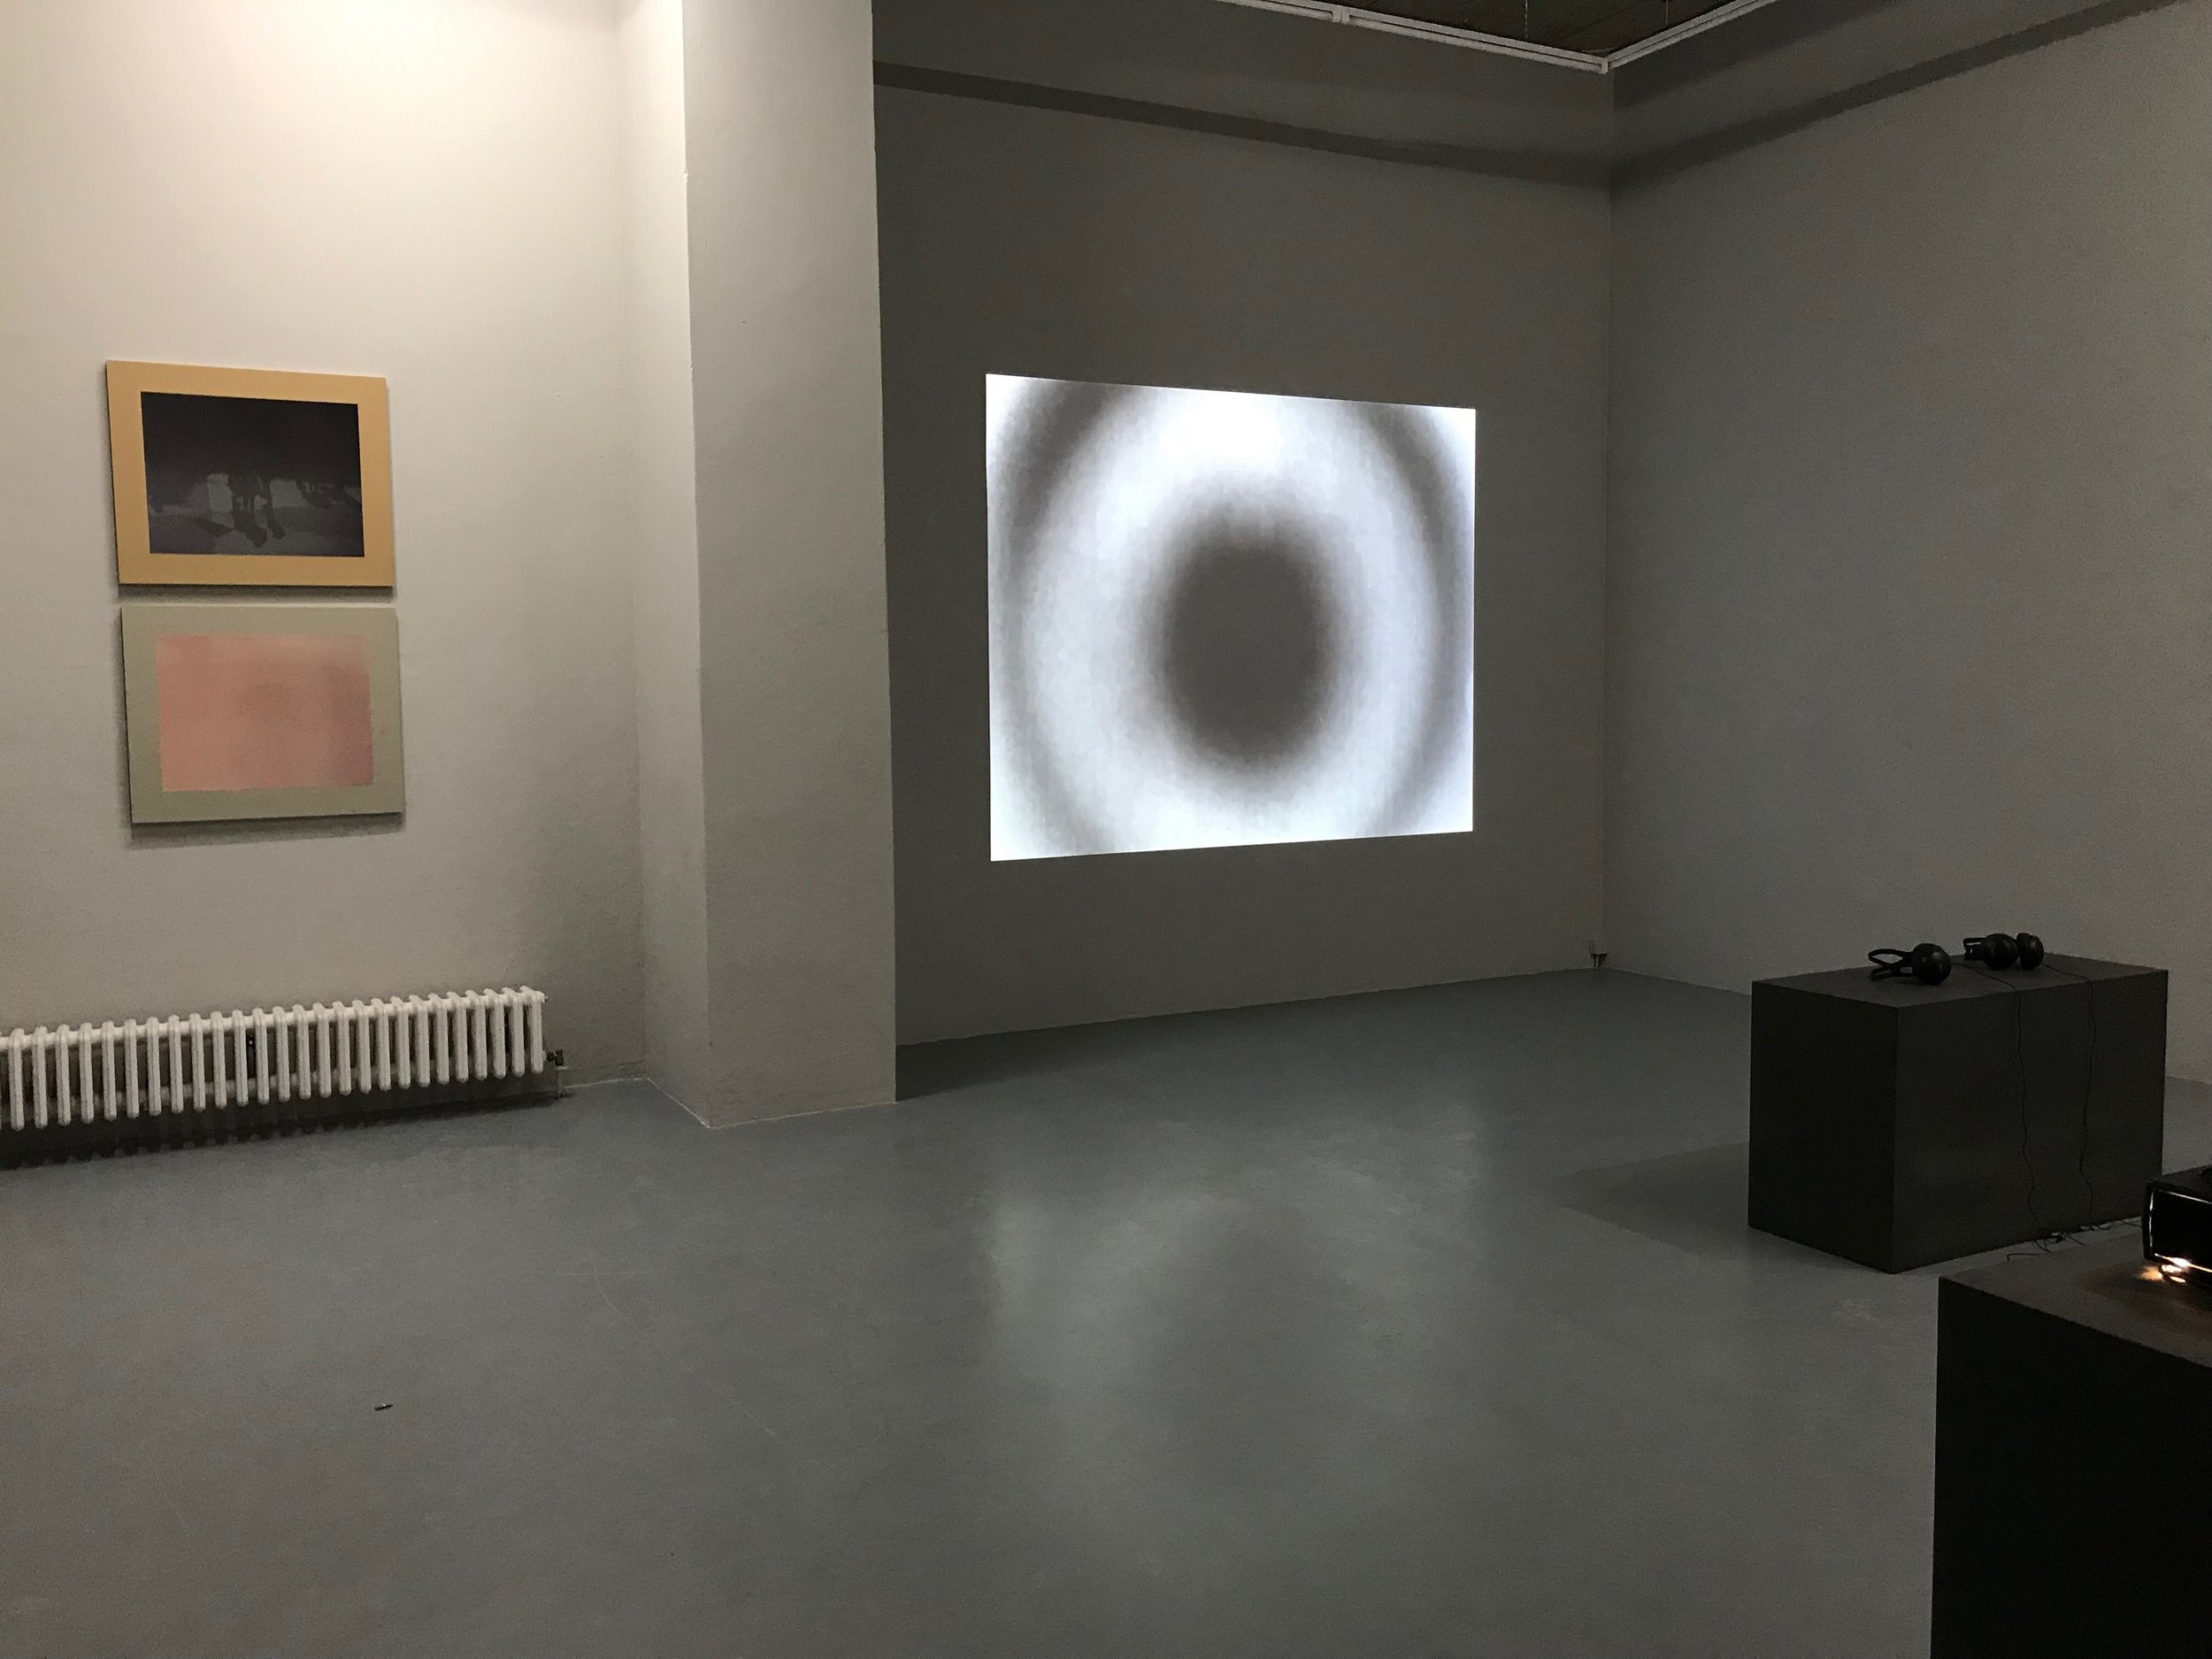  Installation view of solo exhibition  Early Reading / Interbeing,  Dorothee Nilsson Gallery, Berlin, DE, 2020 